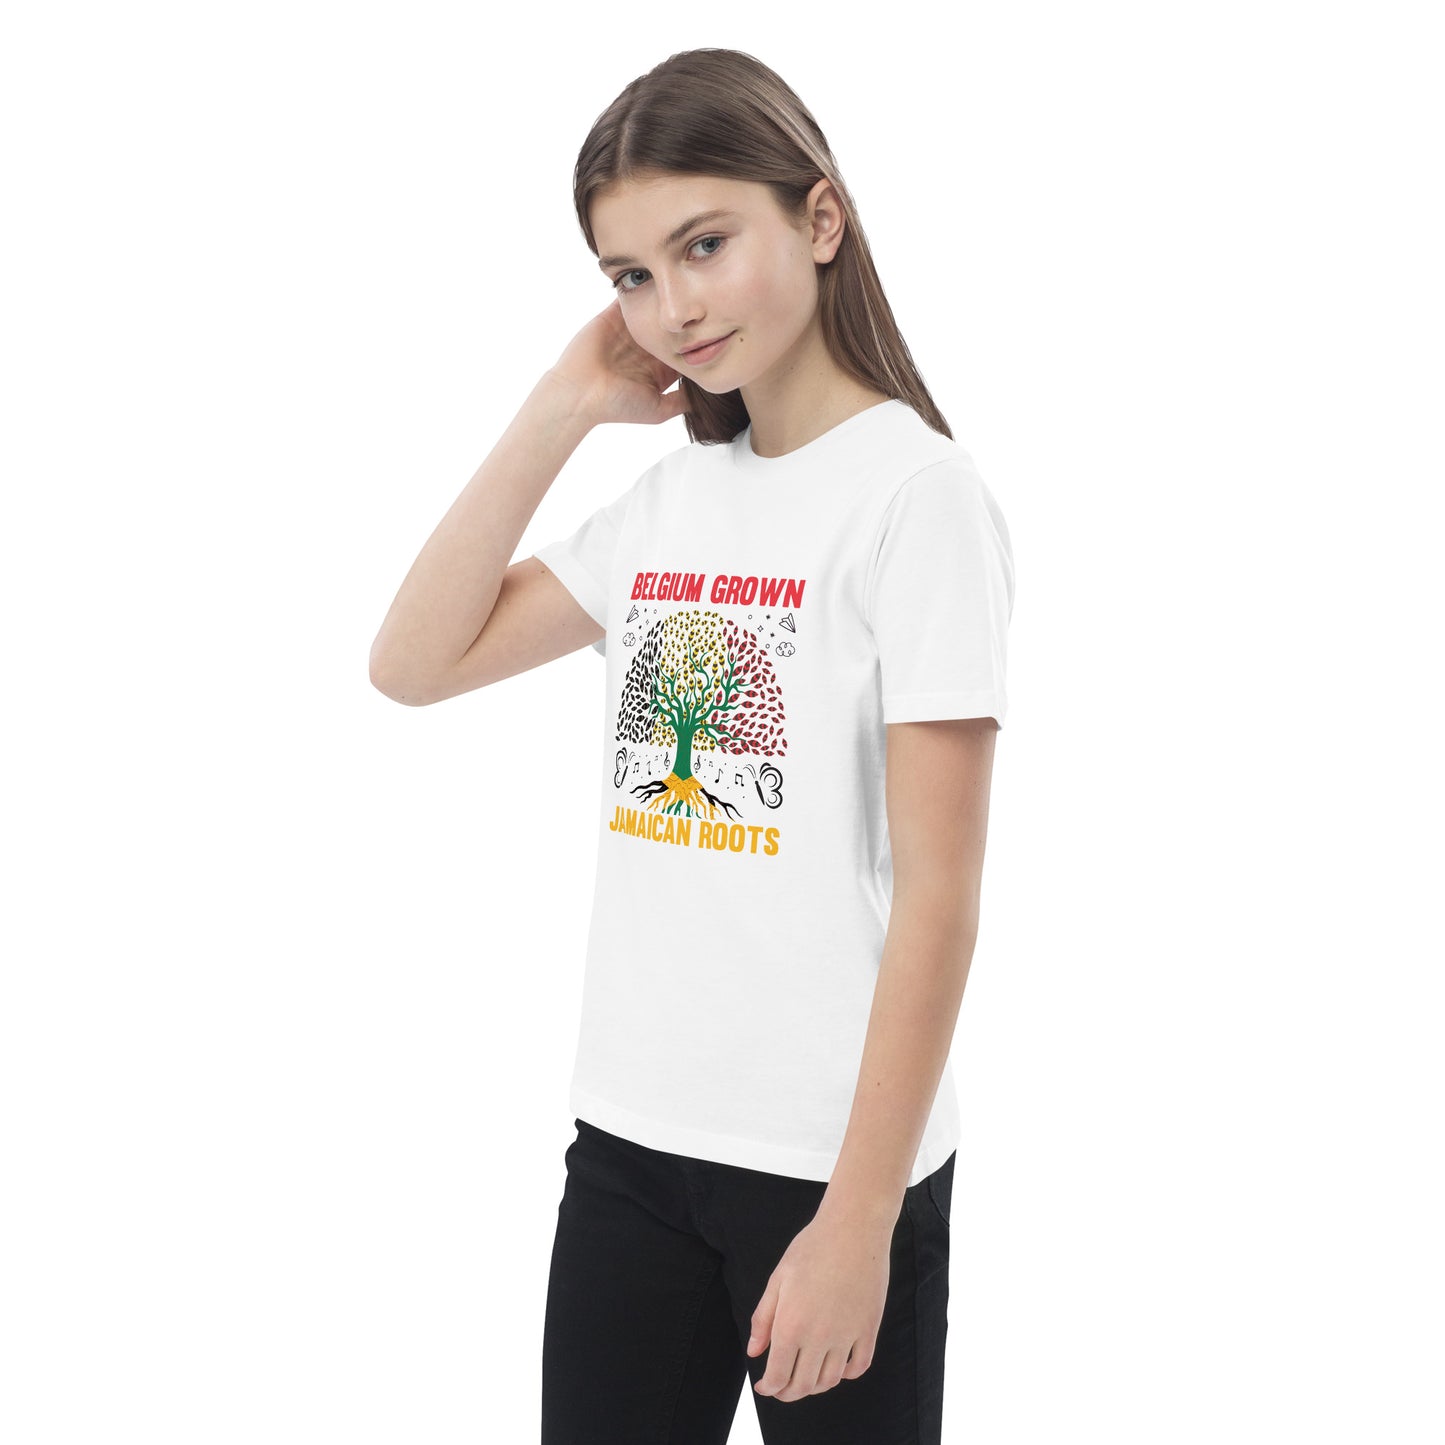 Organic cotton kids "Belgian Grown" t-shirt